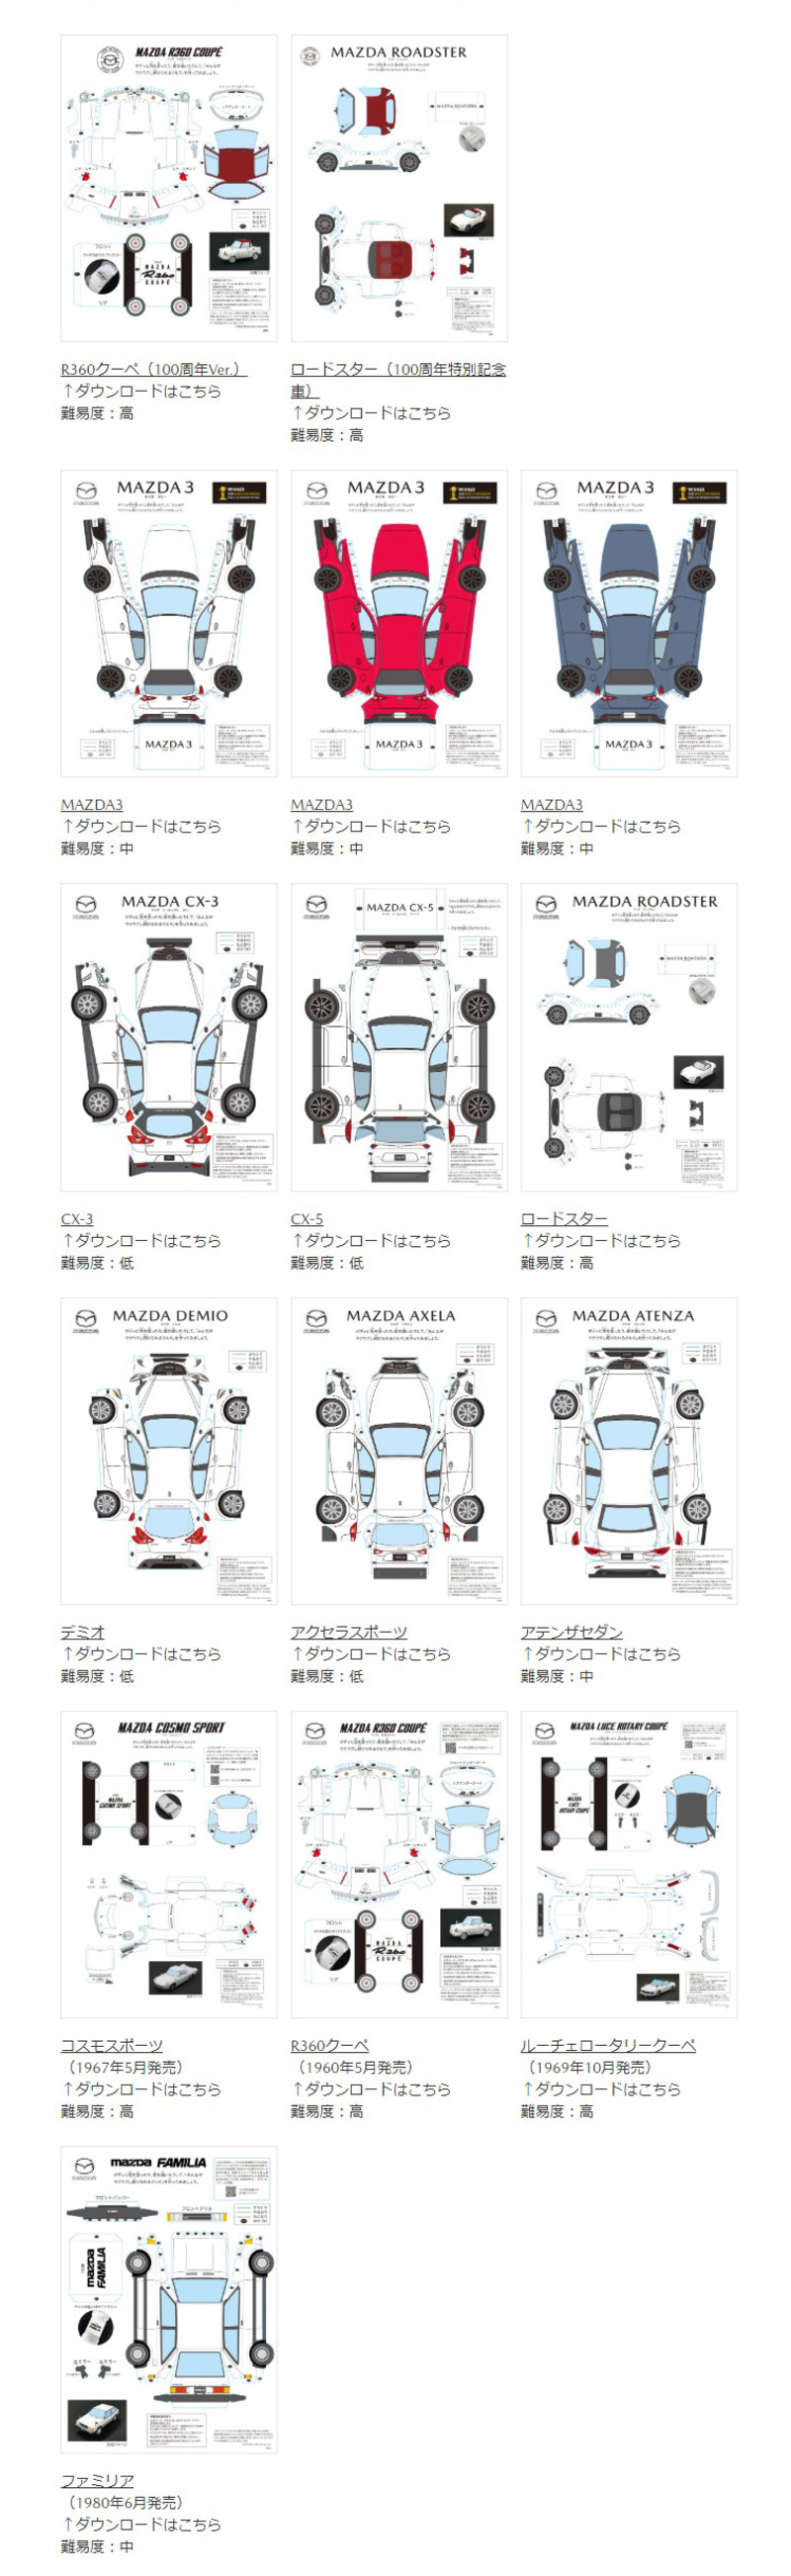 Nissan、Mazda推出纸模型供人下载DIY，是否为不让人出门的好方法-bbin官网_ bbin投诉_bbin平台_bbin客服_bbin宝盈集团官网